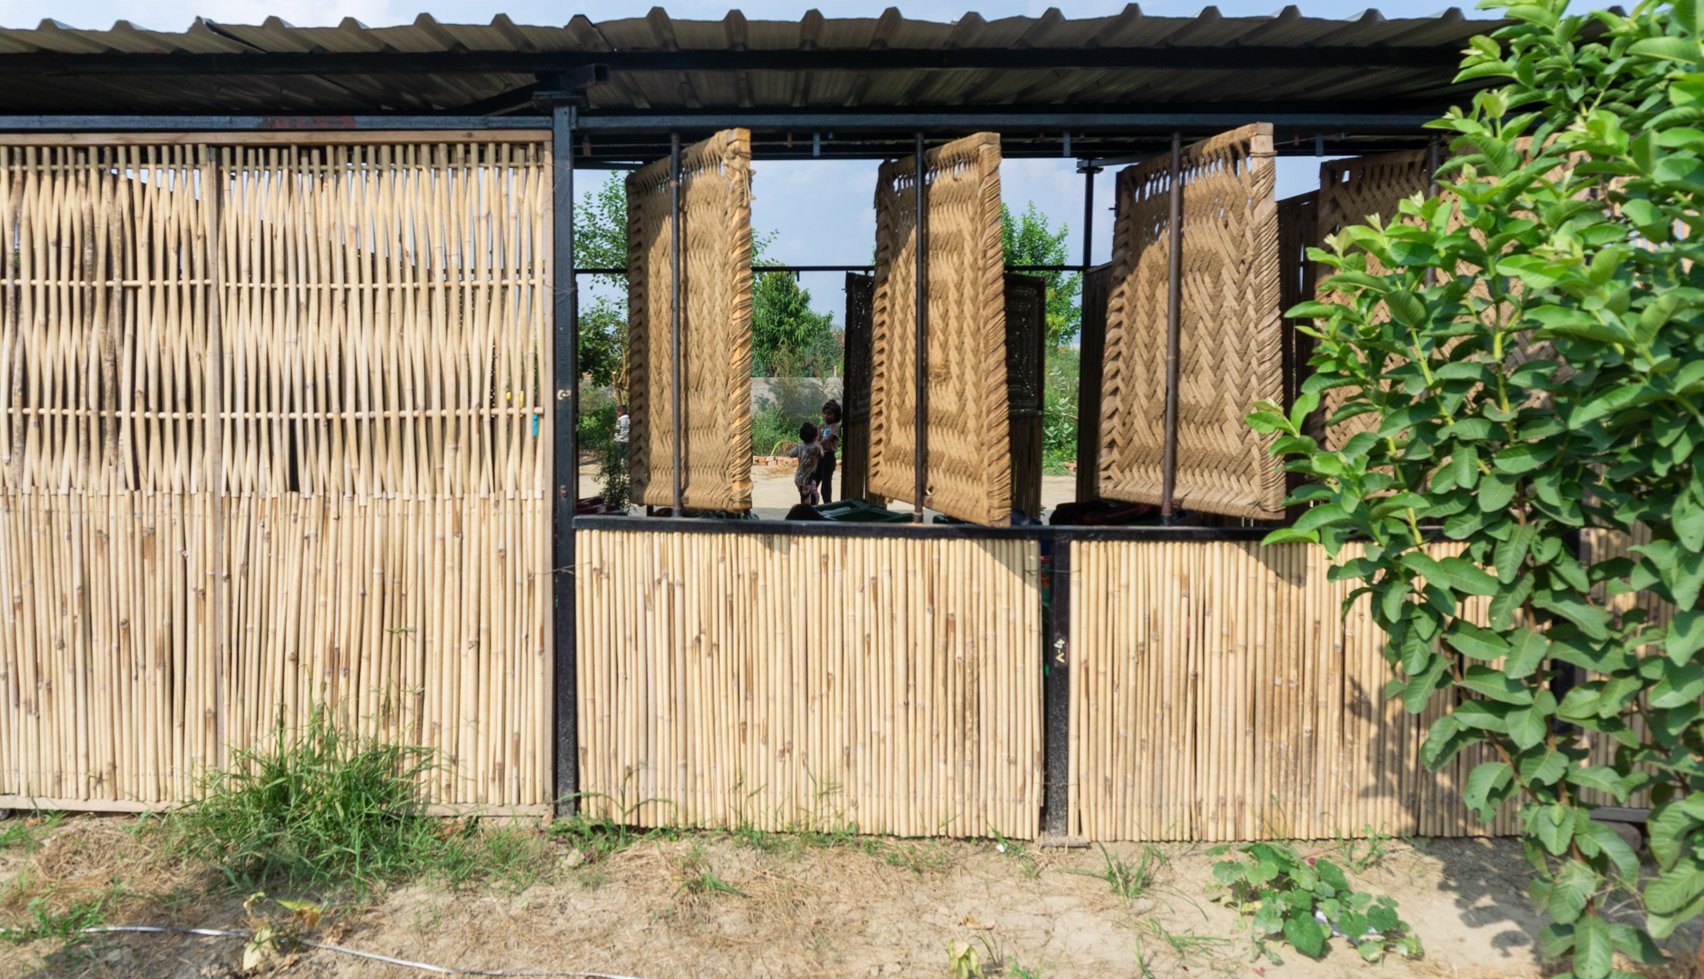 A bamboo school